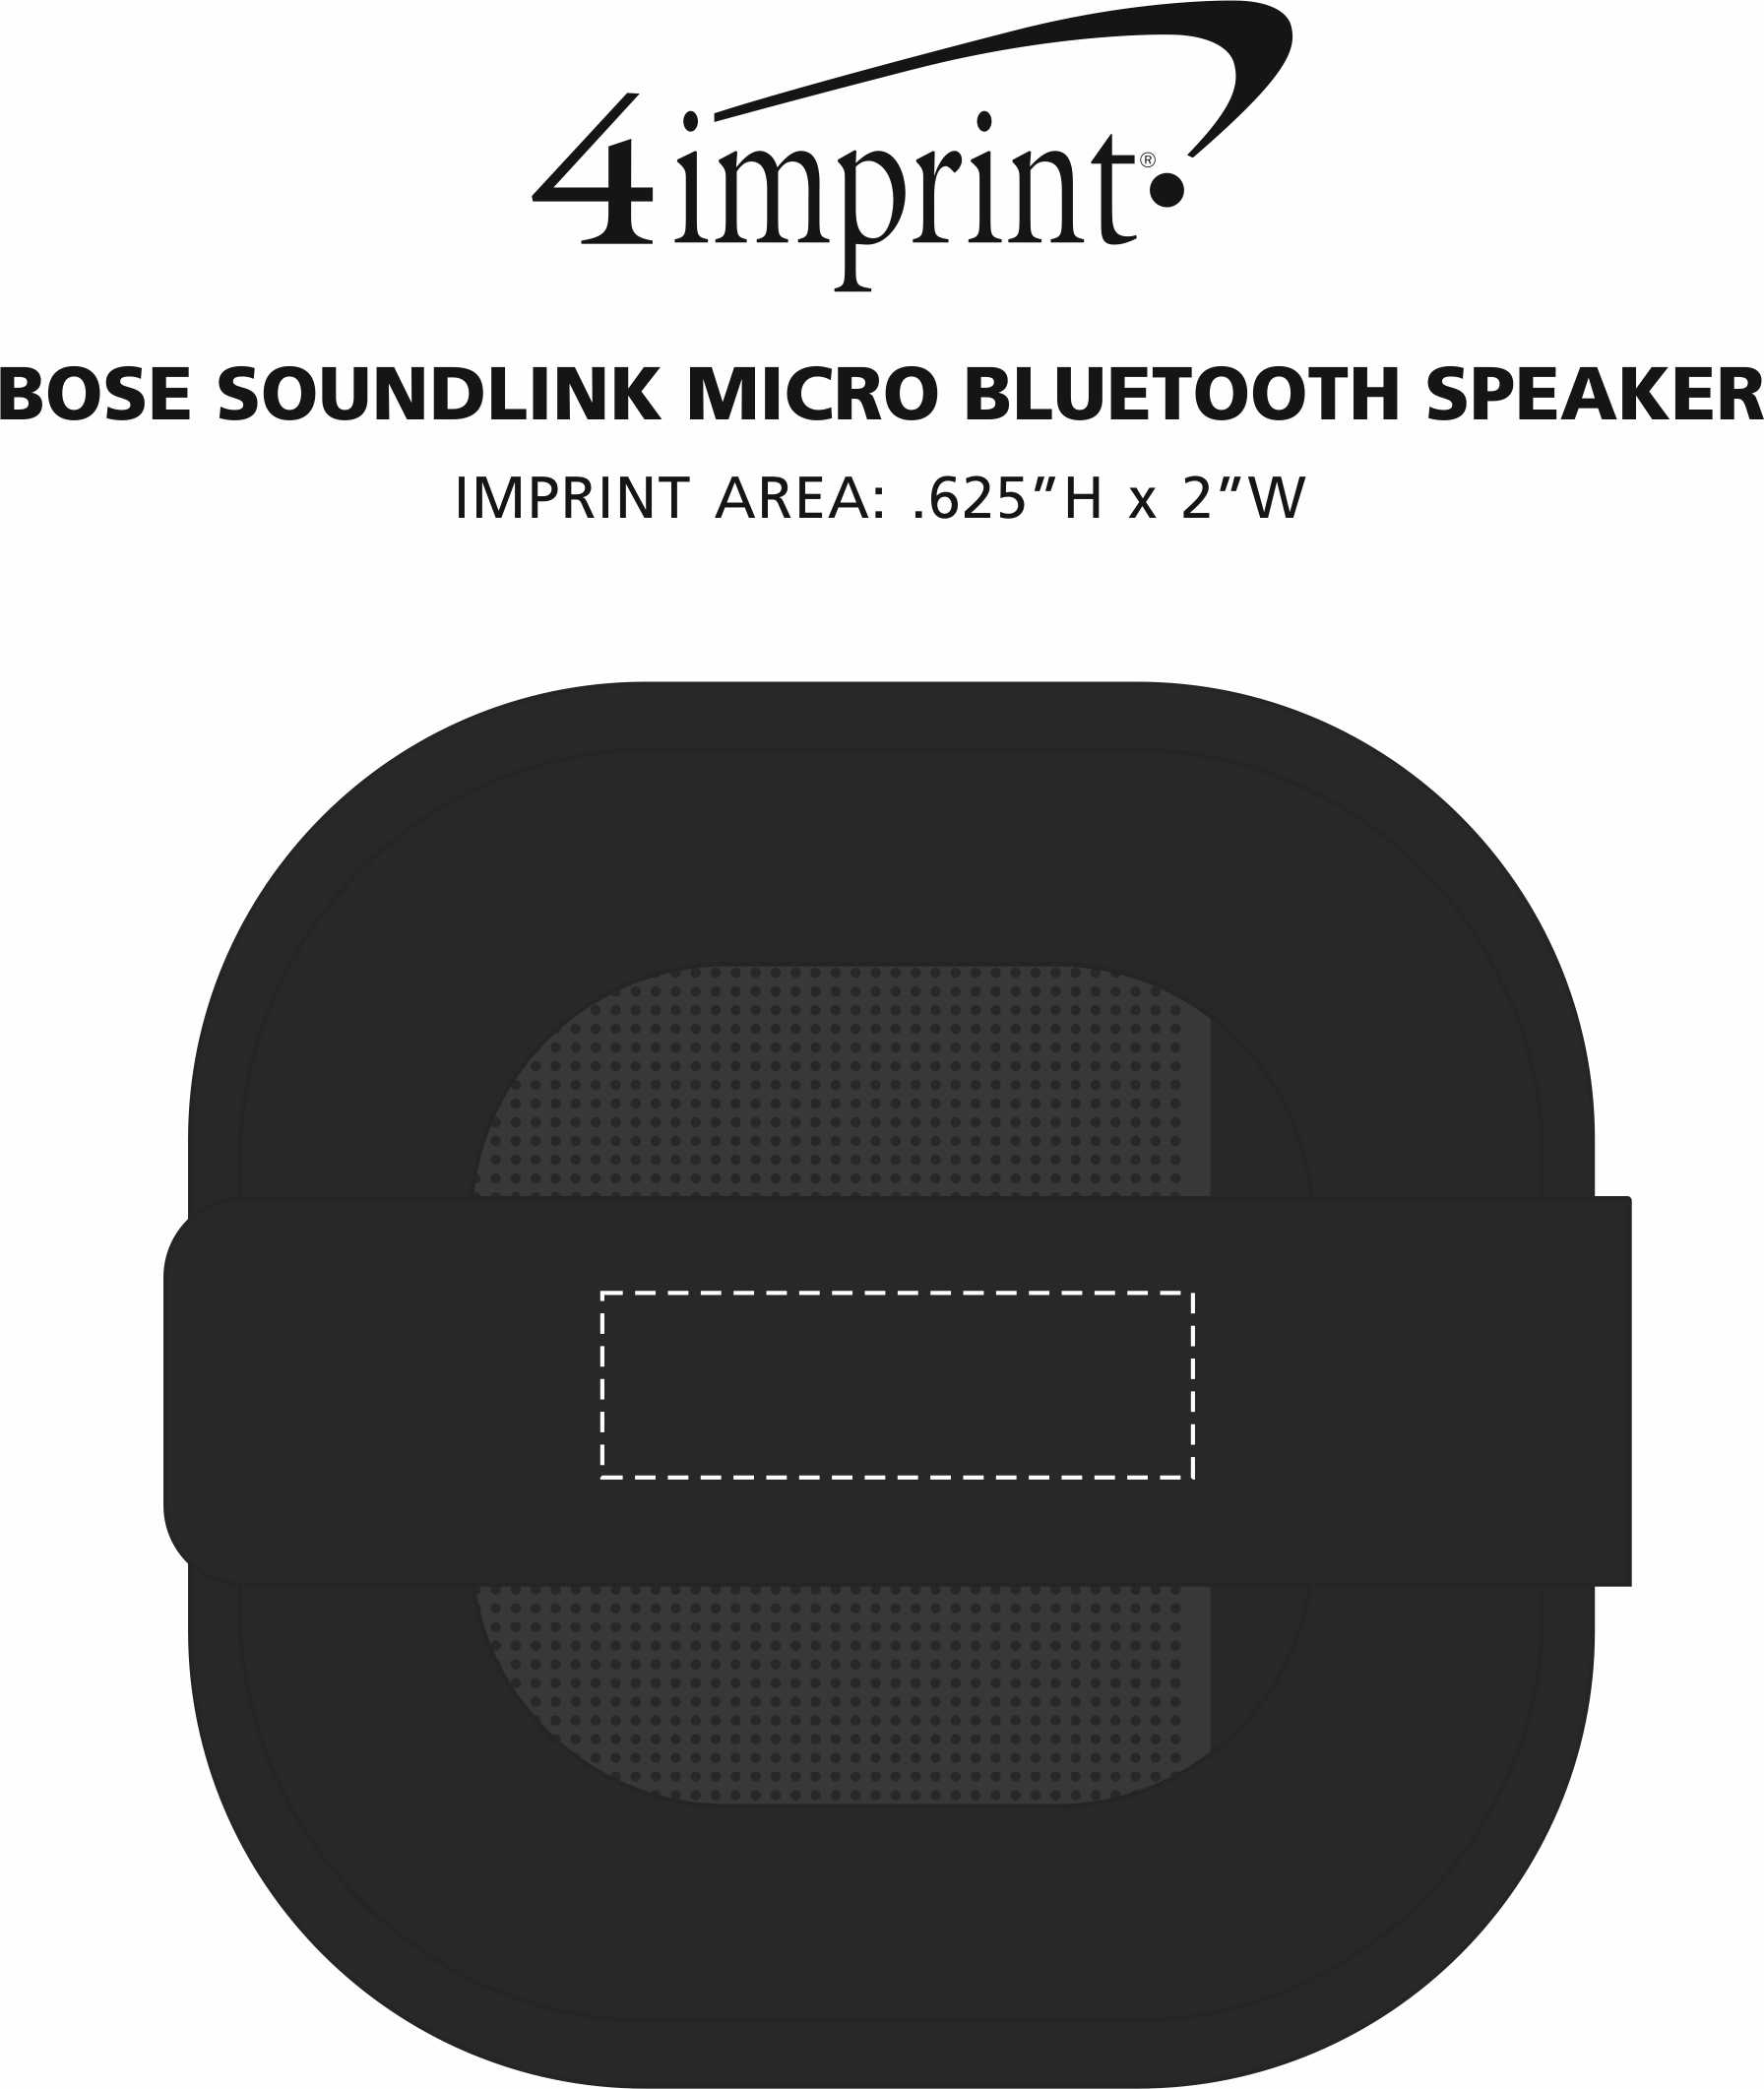 Imprint Area of Bose Soundlink Micro Bluetooth Speaker